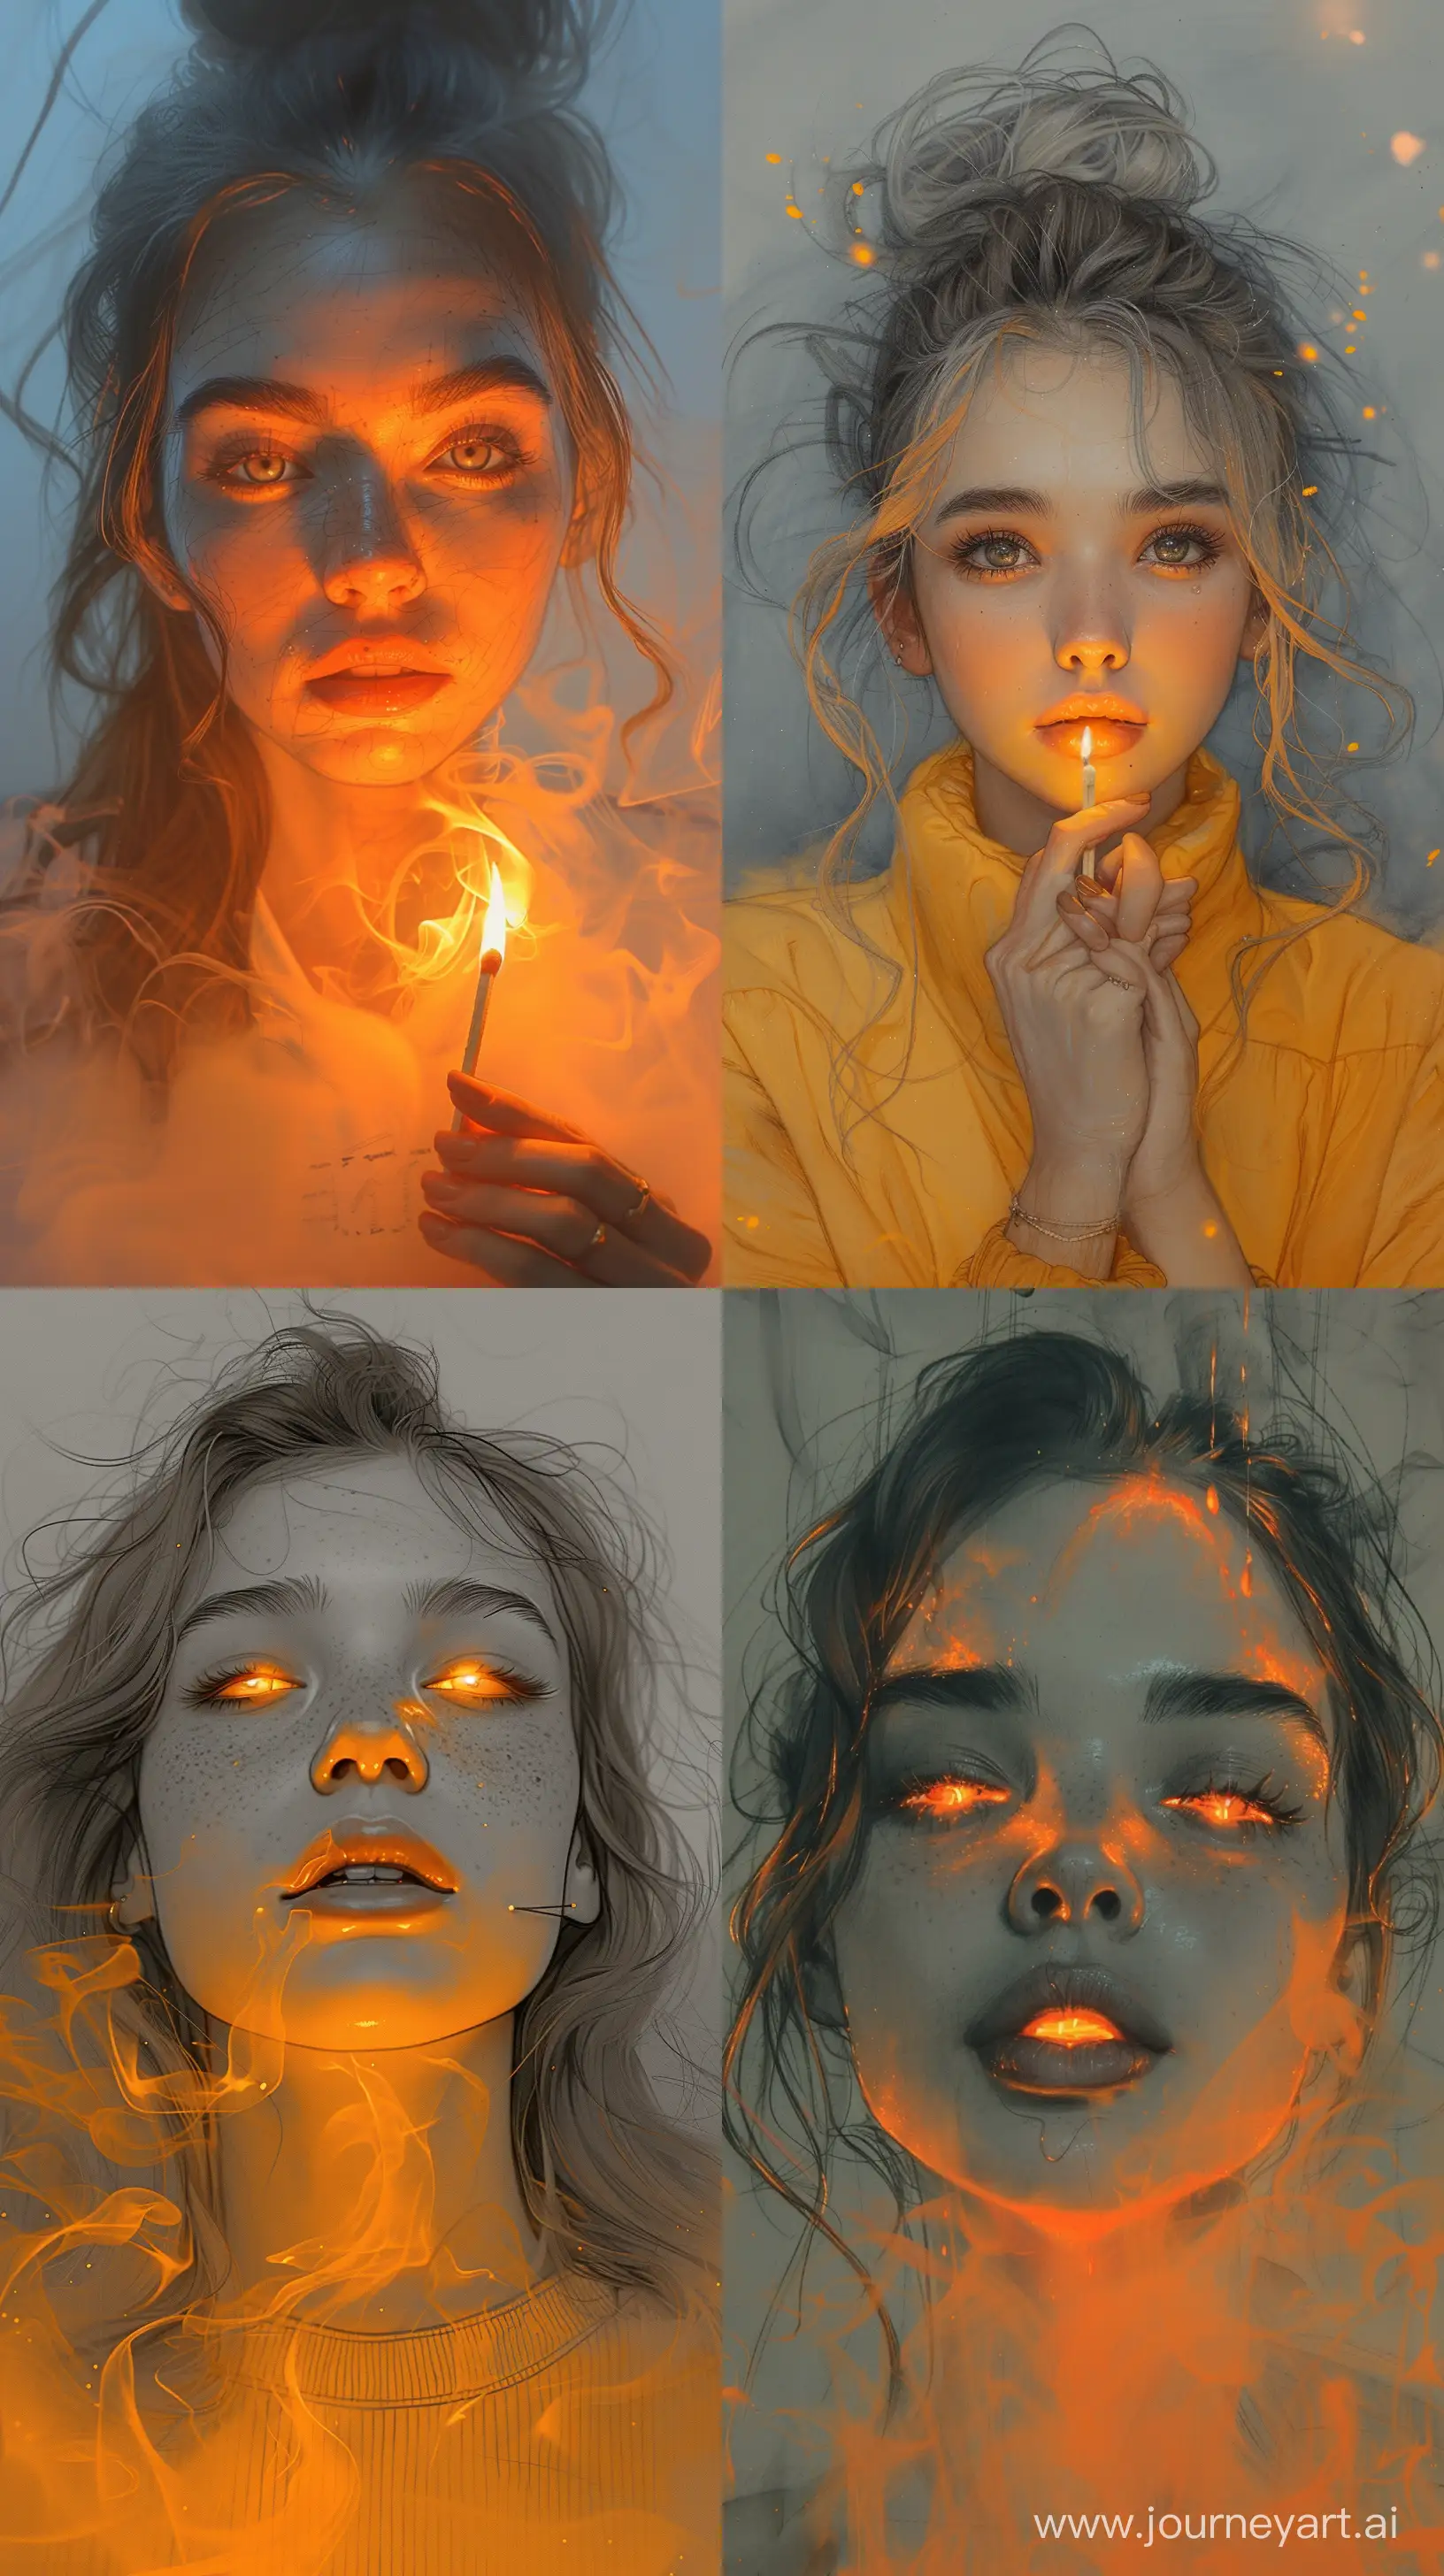 Charming-Feminine-Portraits-Delicate-Matchstick-Art-in-Golden-Glow